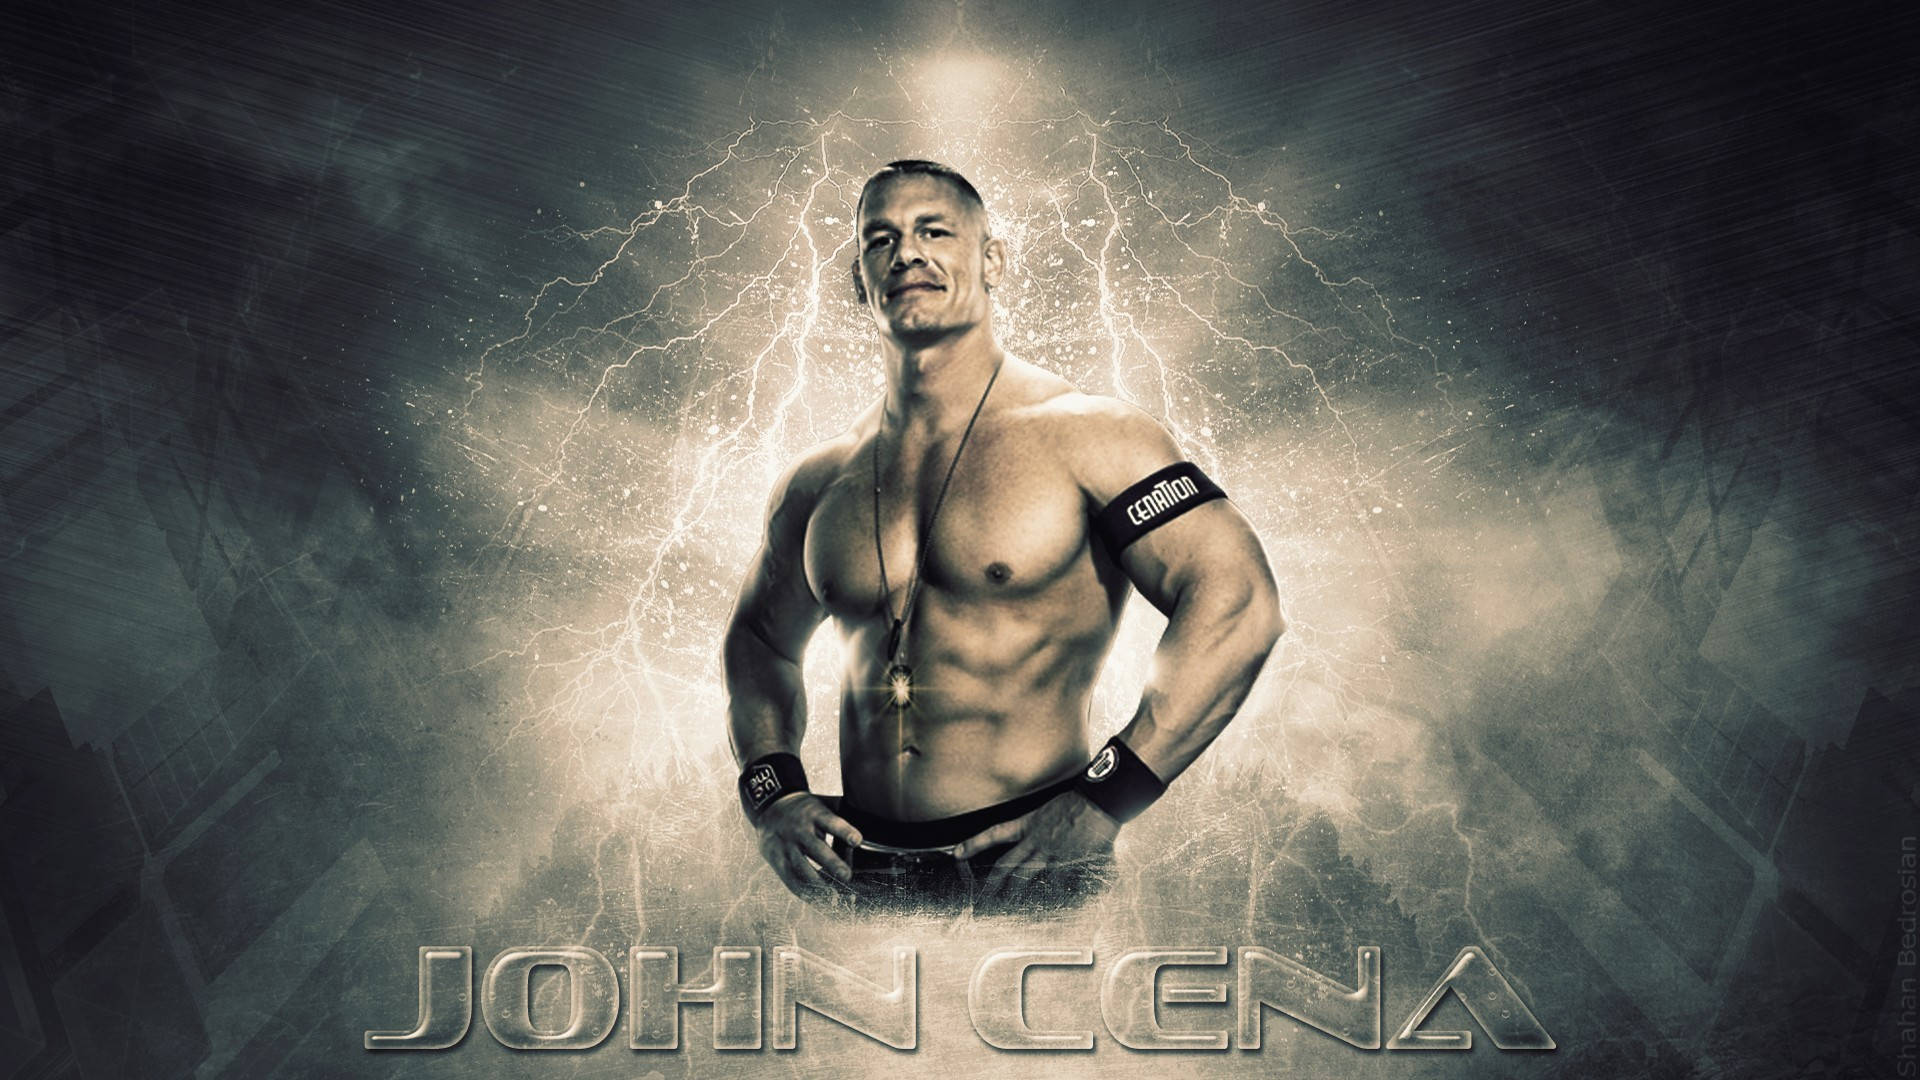 John Cena 1920X1080 Wallpaper and Background Image